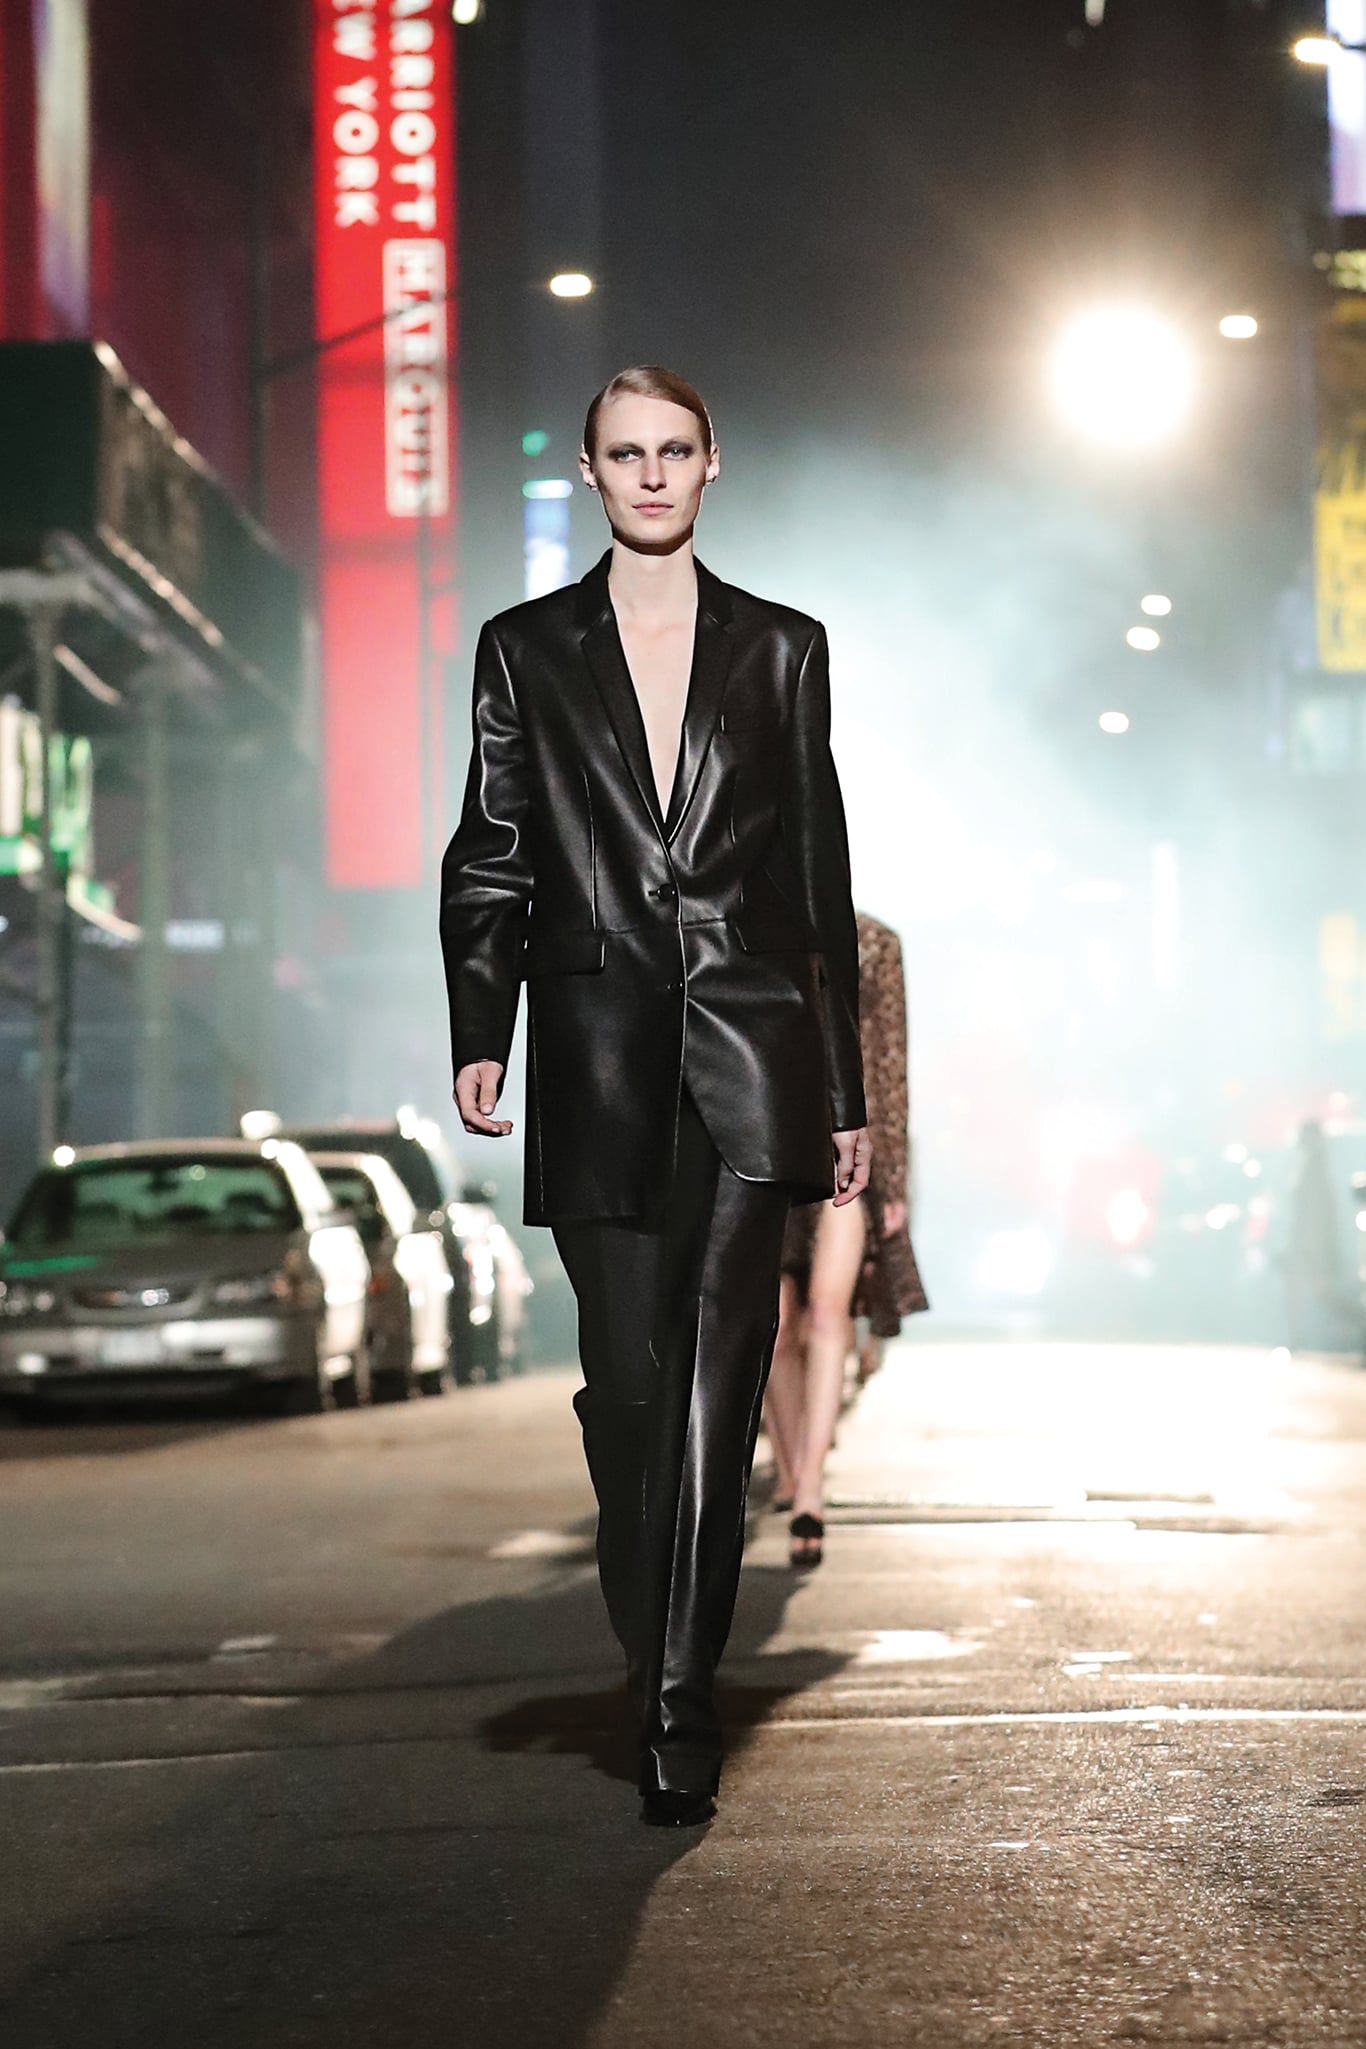 Fashion, Shopping & Style | Michael Kors Debuts His 